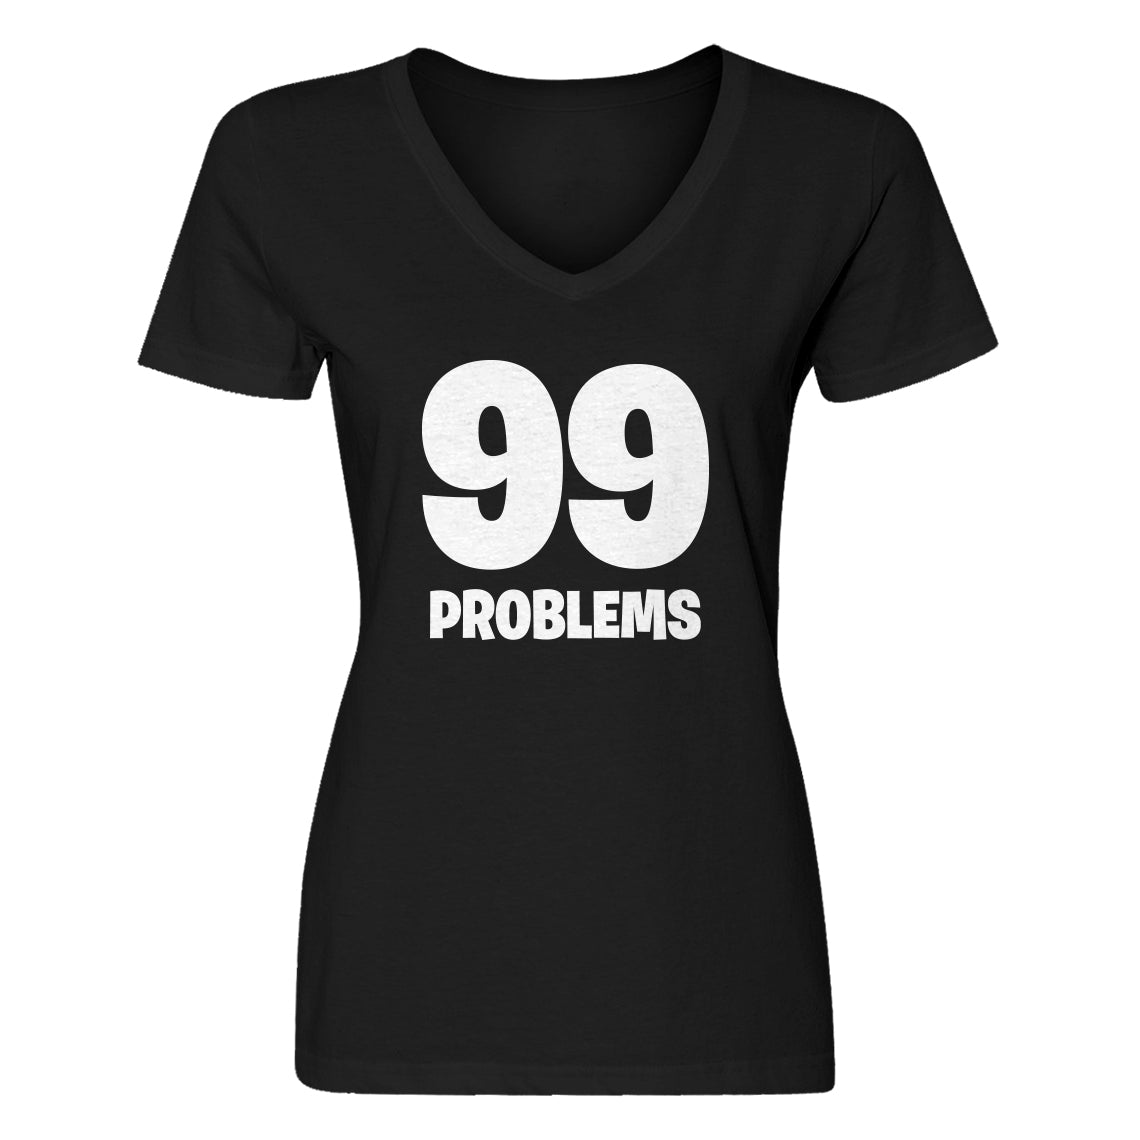 Womens 99 Problems Vneck T-shirt